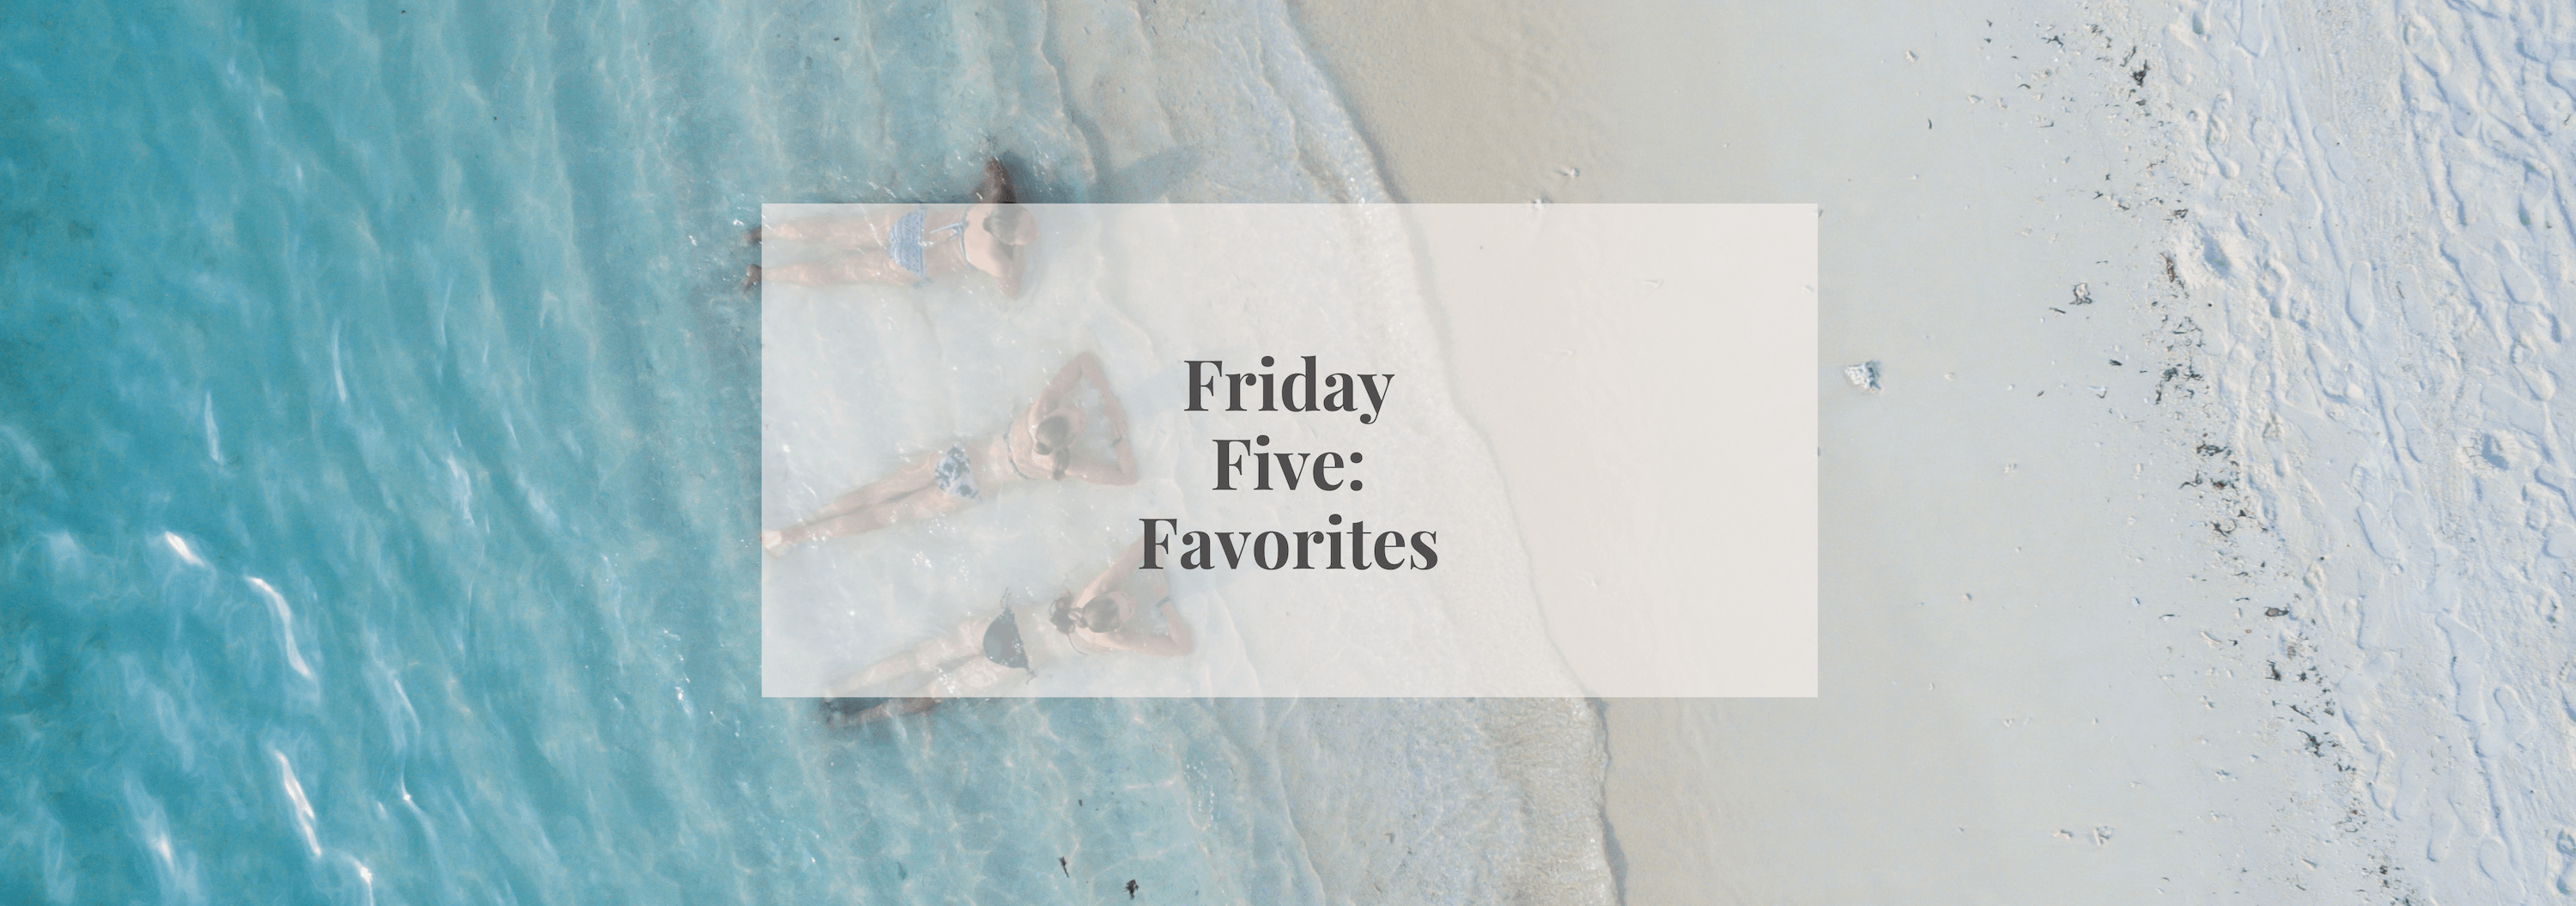 Friday Five - Numi